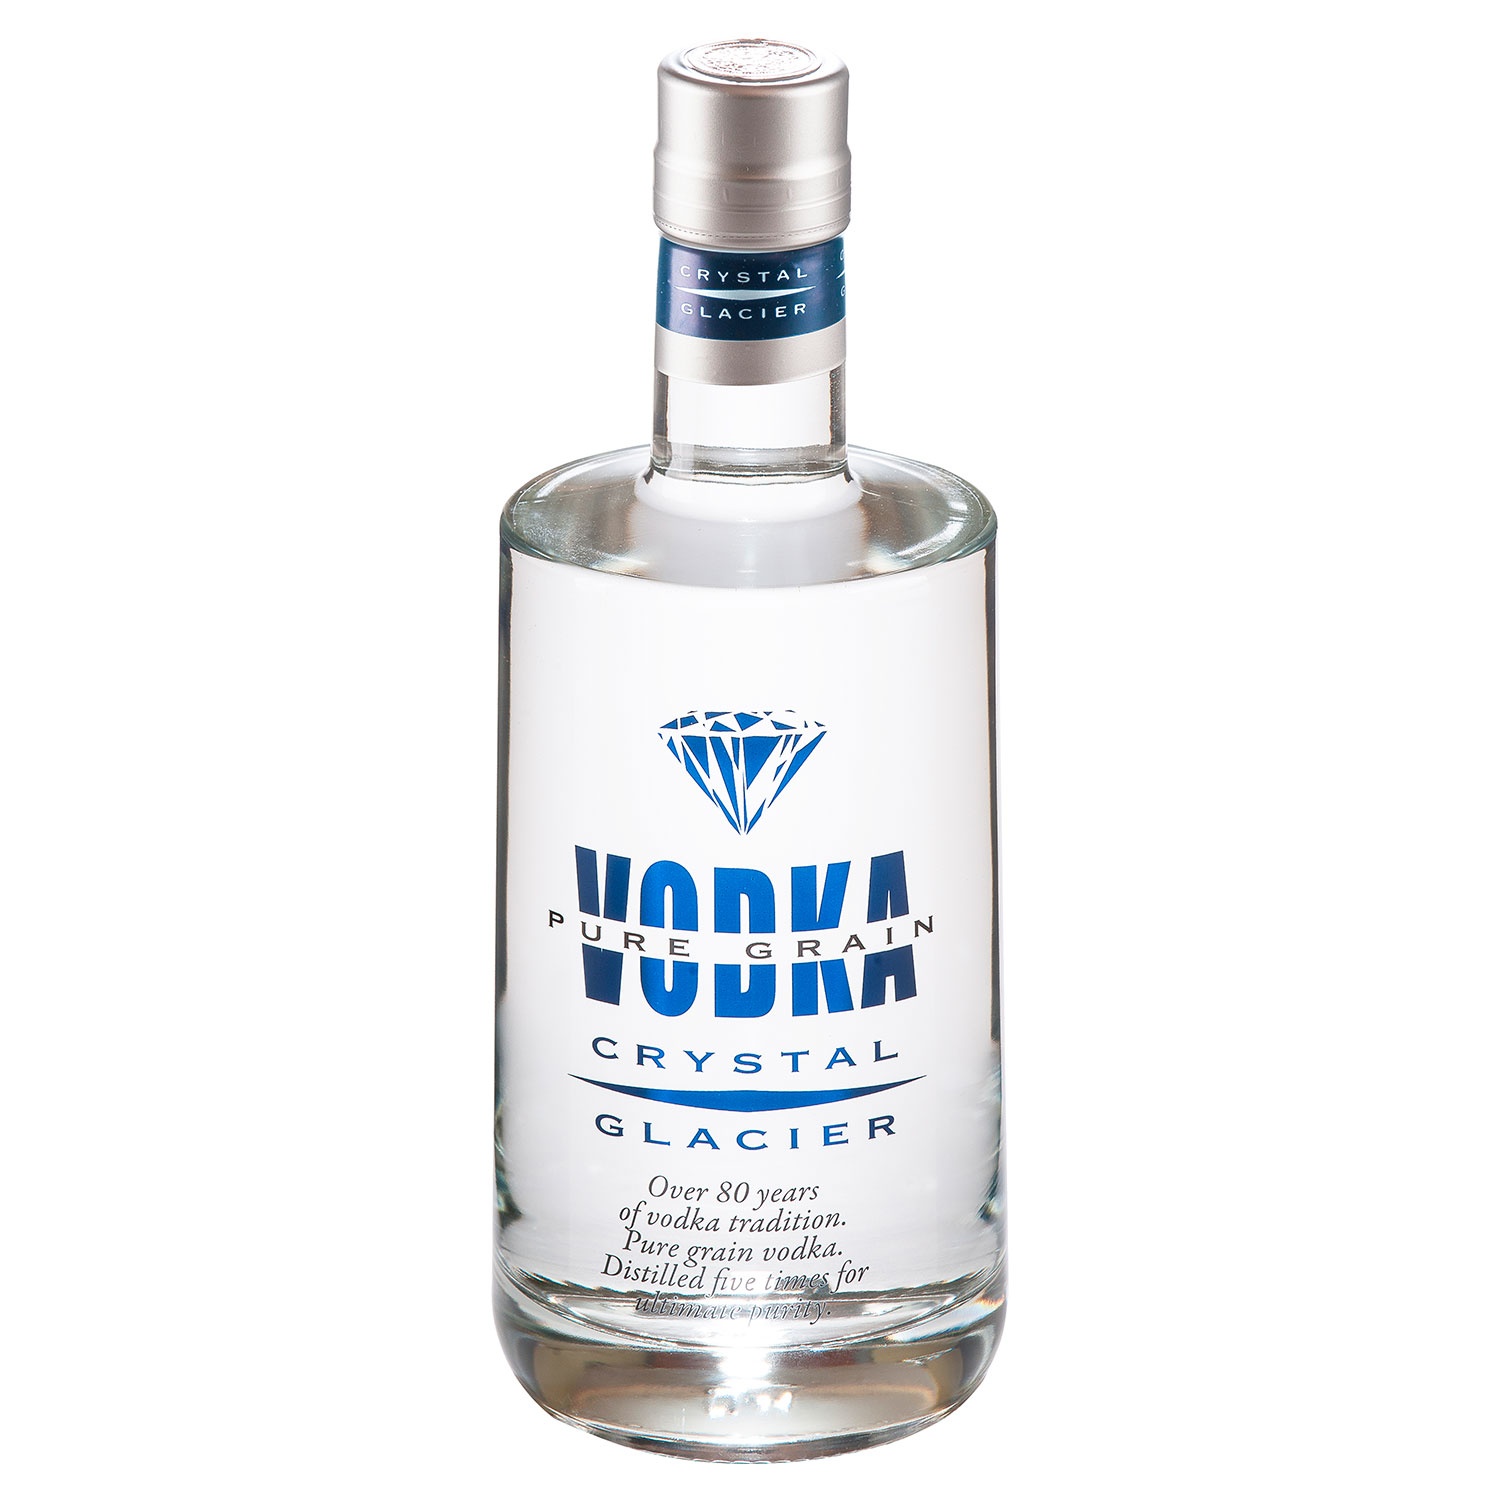 Premium Vodka